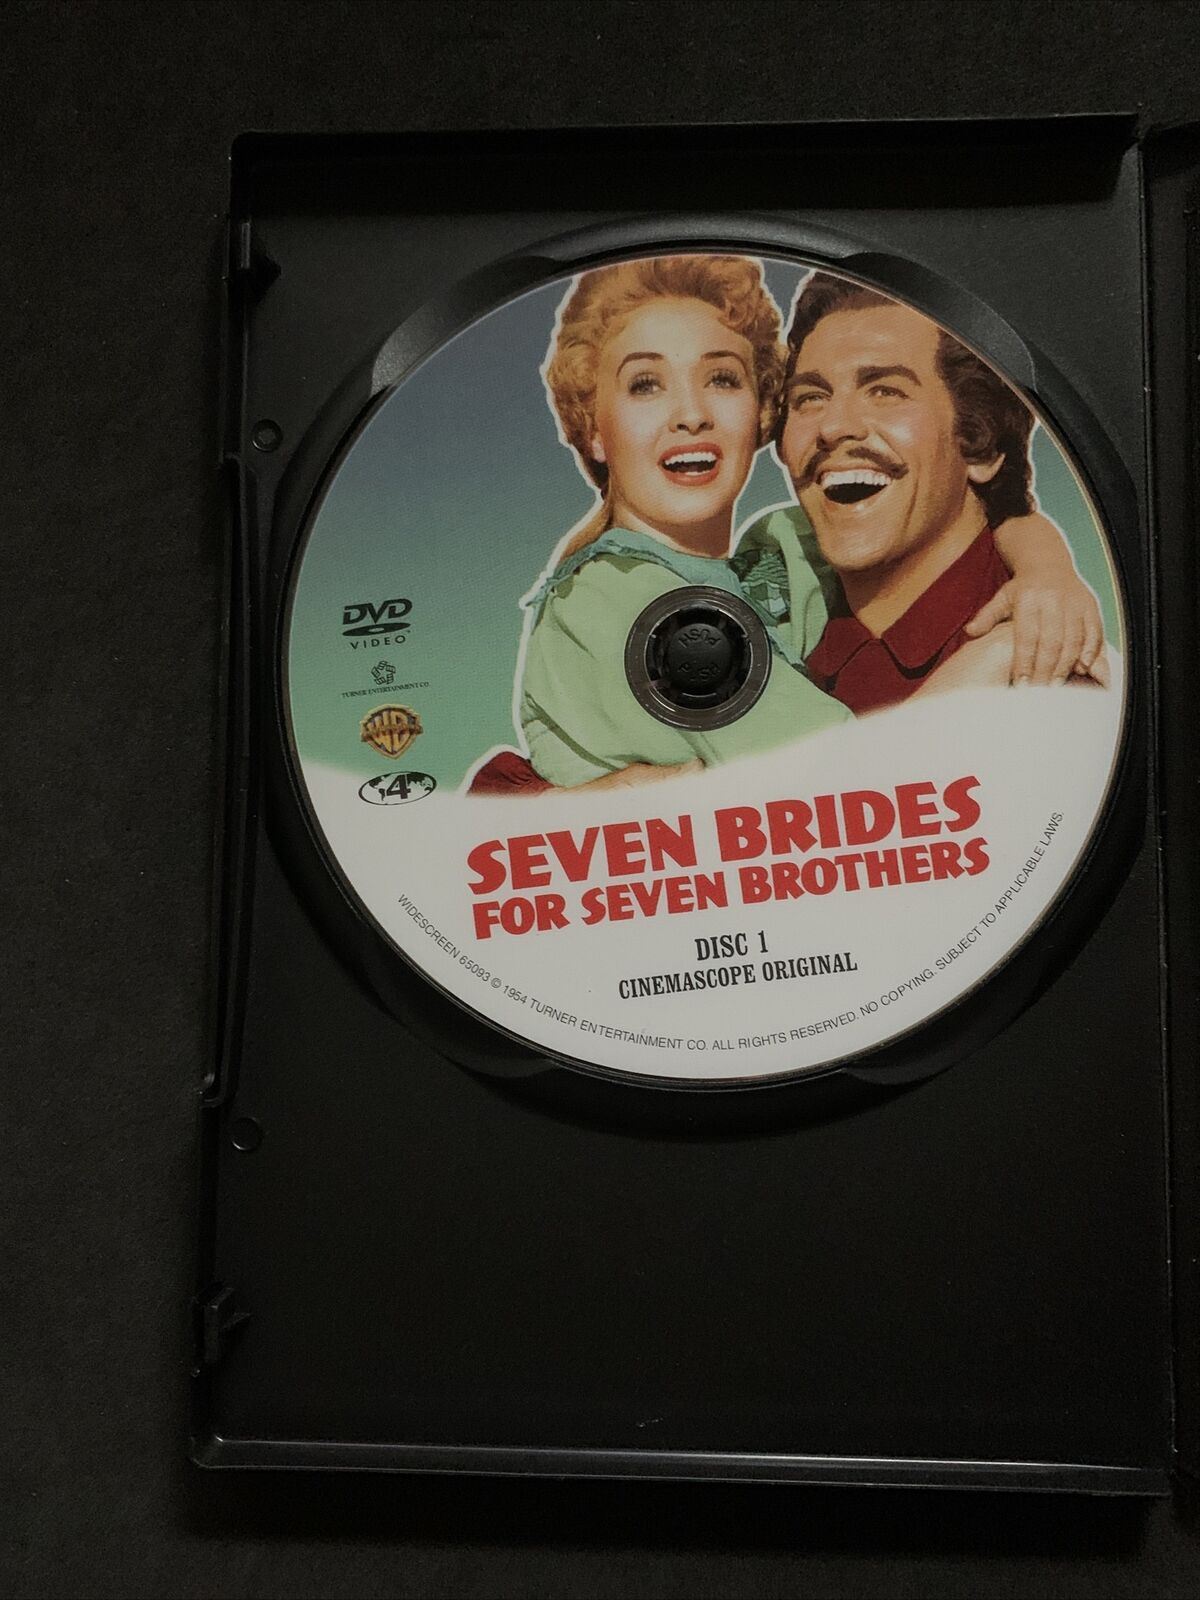 Seven Brides For Seven Brothers (DVD, 1954) Jane Powell, Howard Keel. Region 4